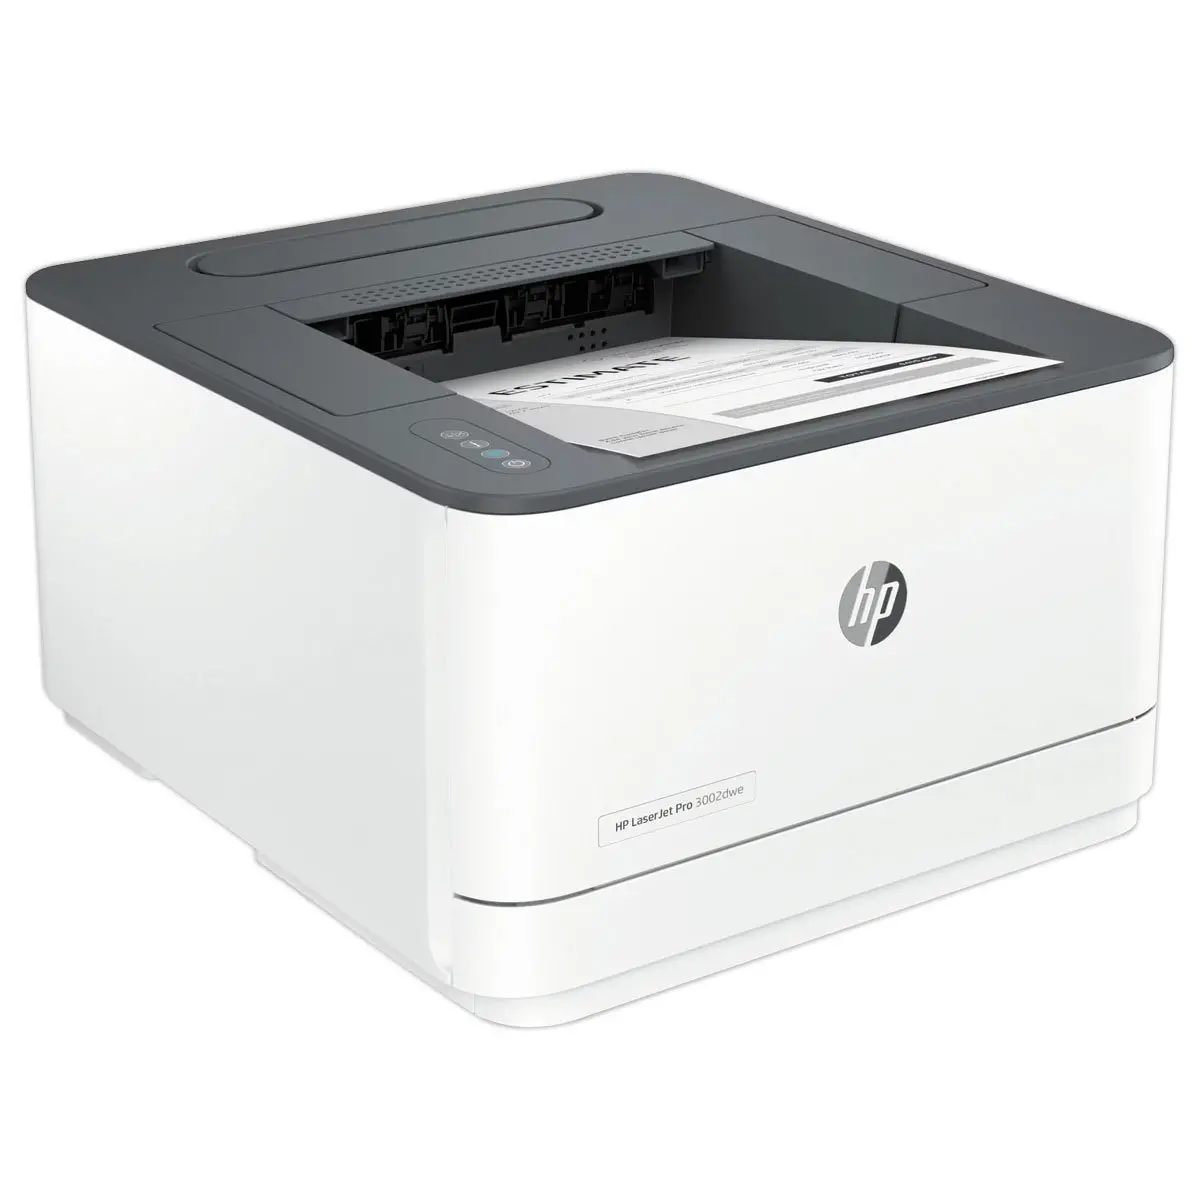 Imprimante monochrome HP LaserJet Pro 3002DWE photo du produit